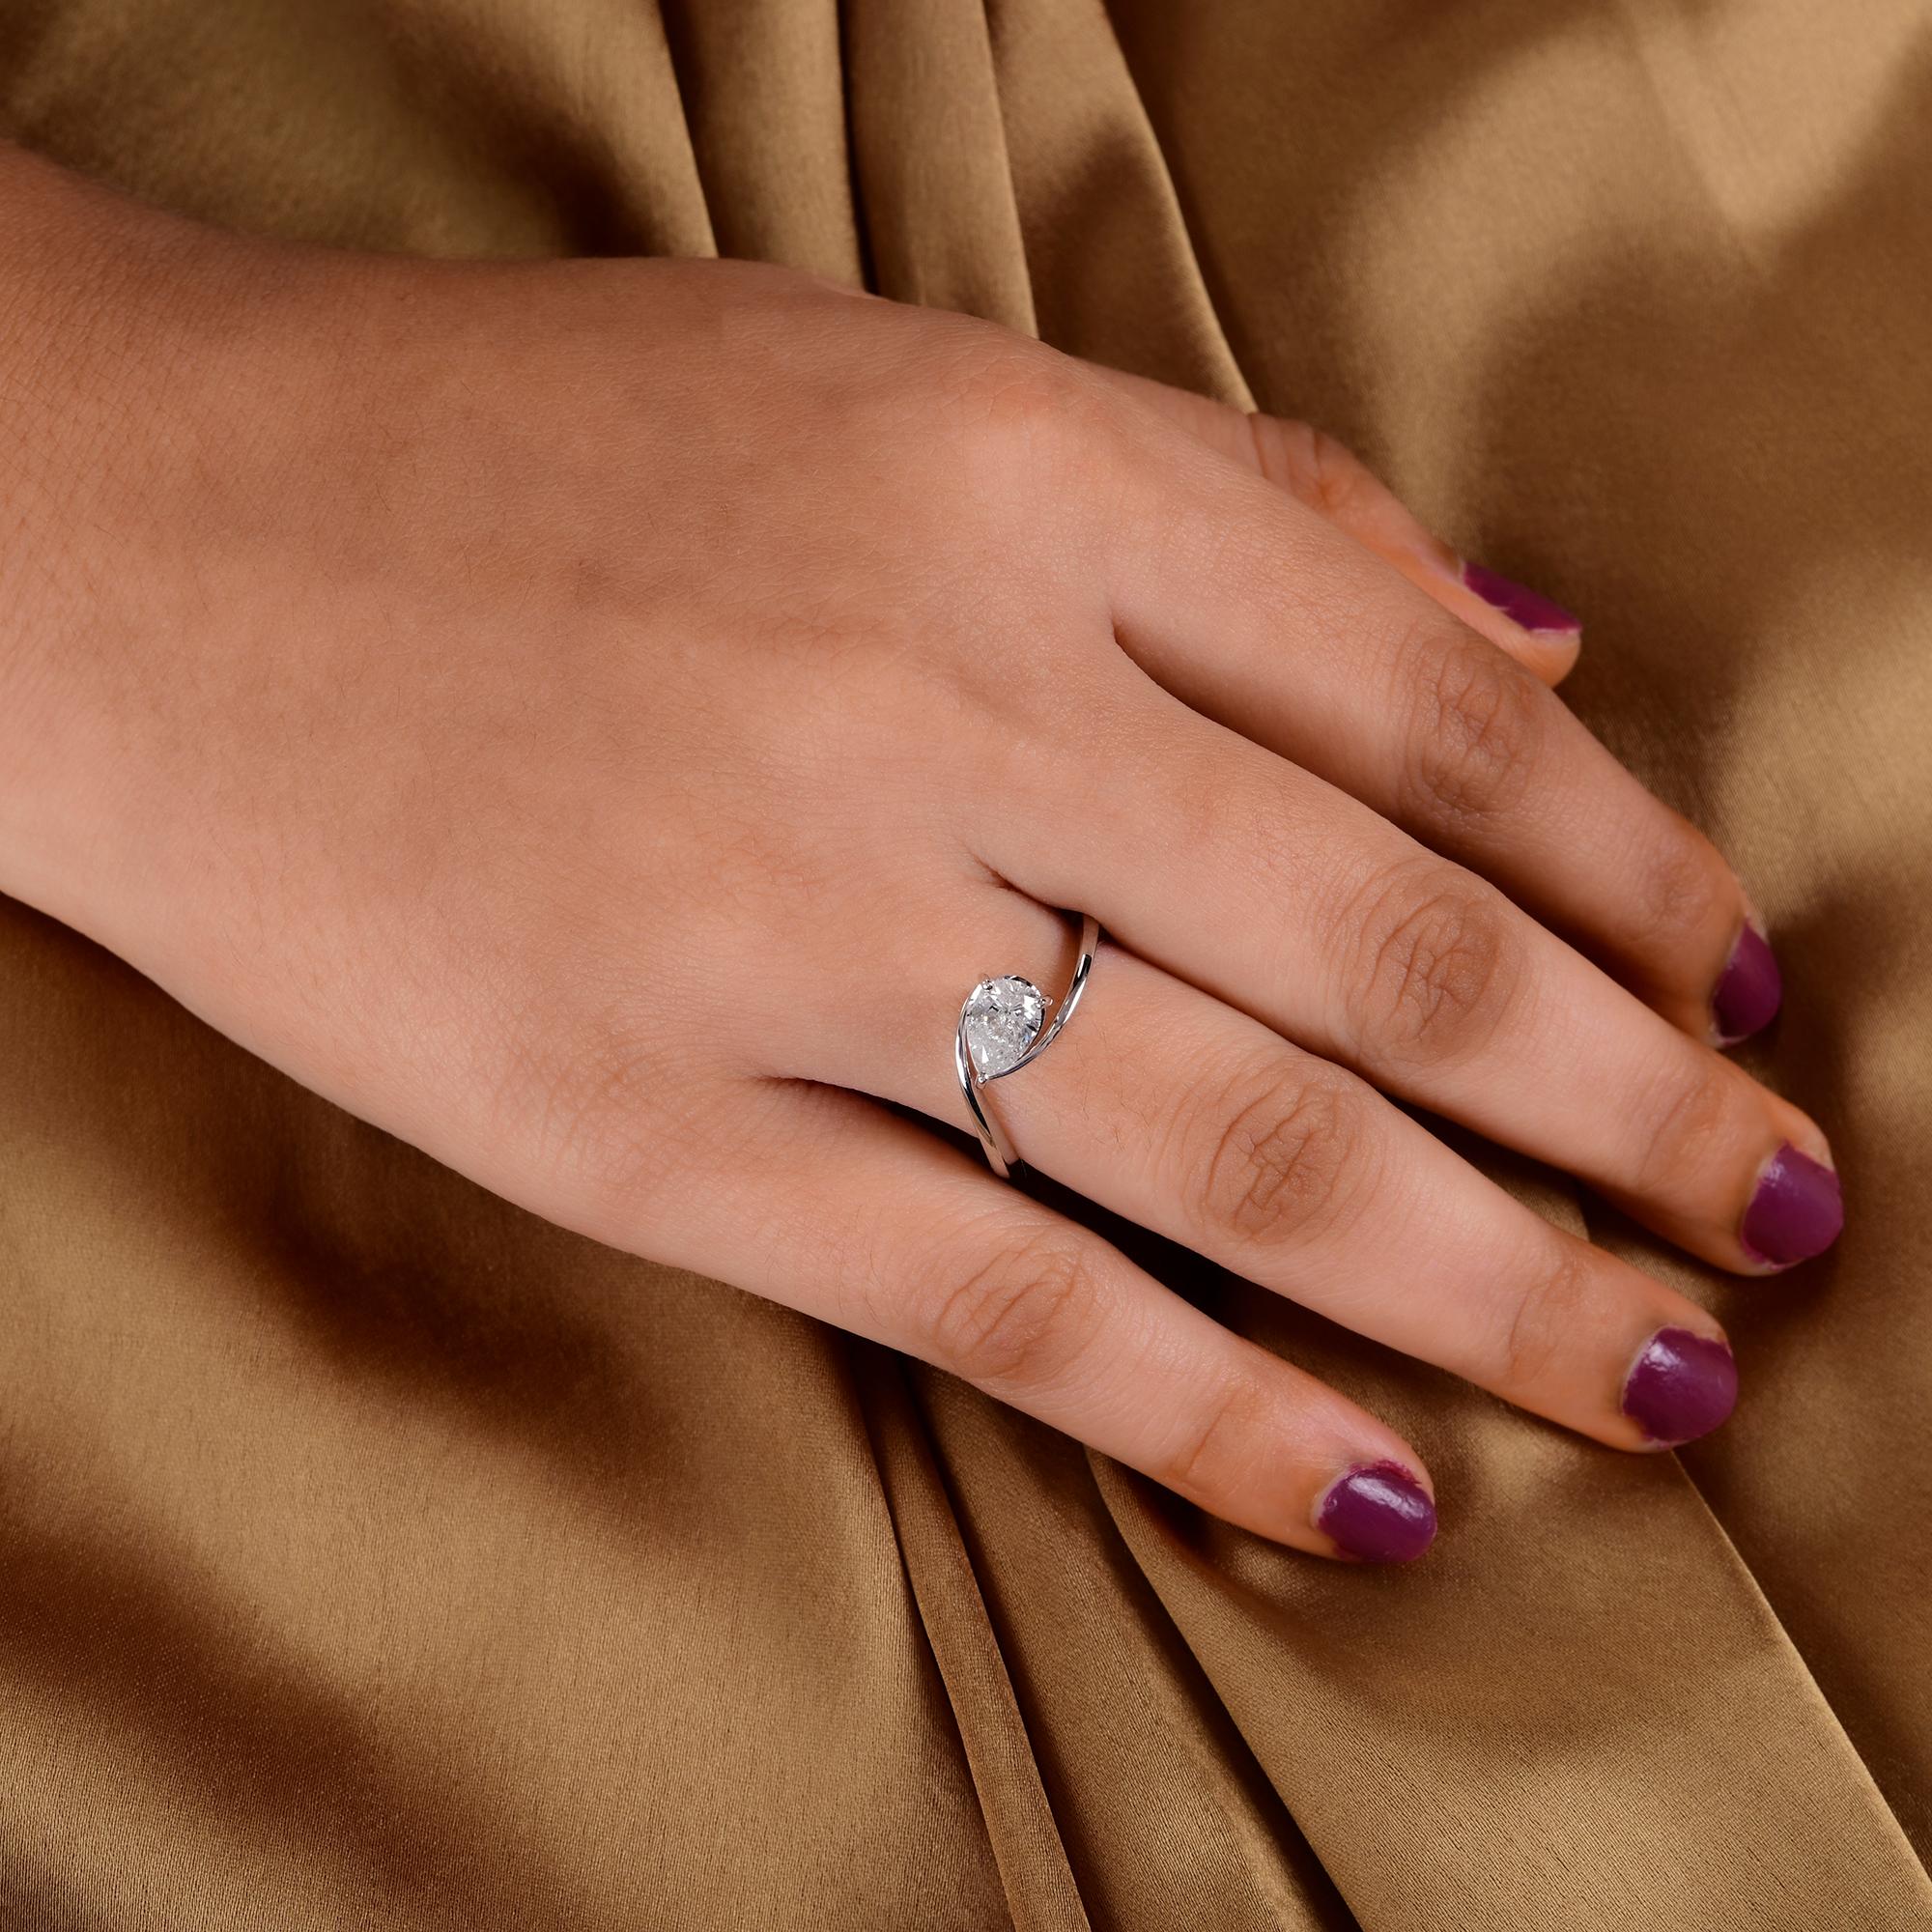 .75 carat pear shaped diamond ring